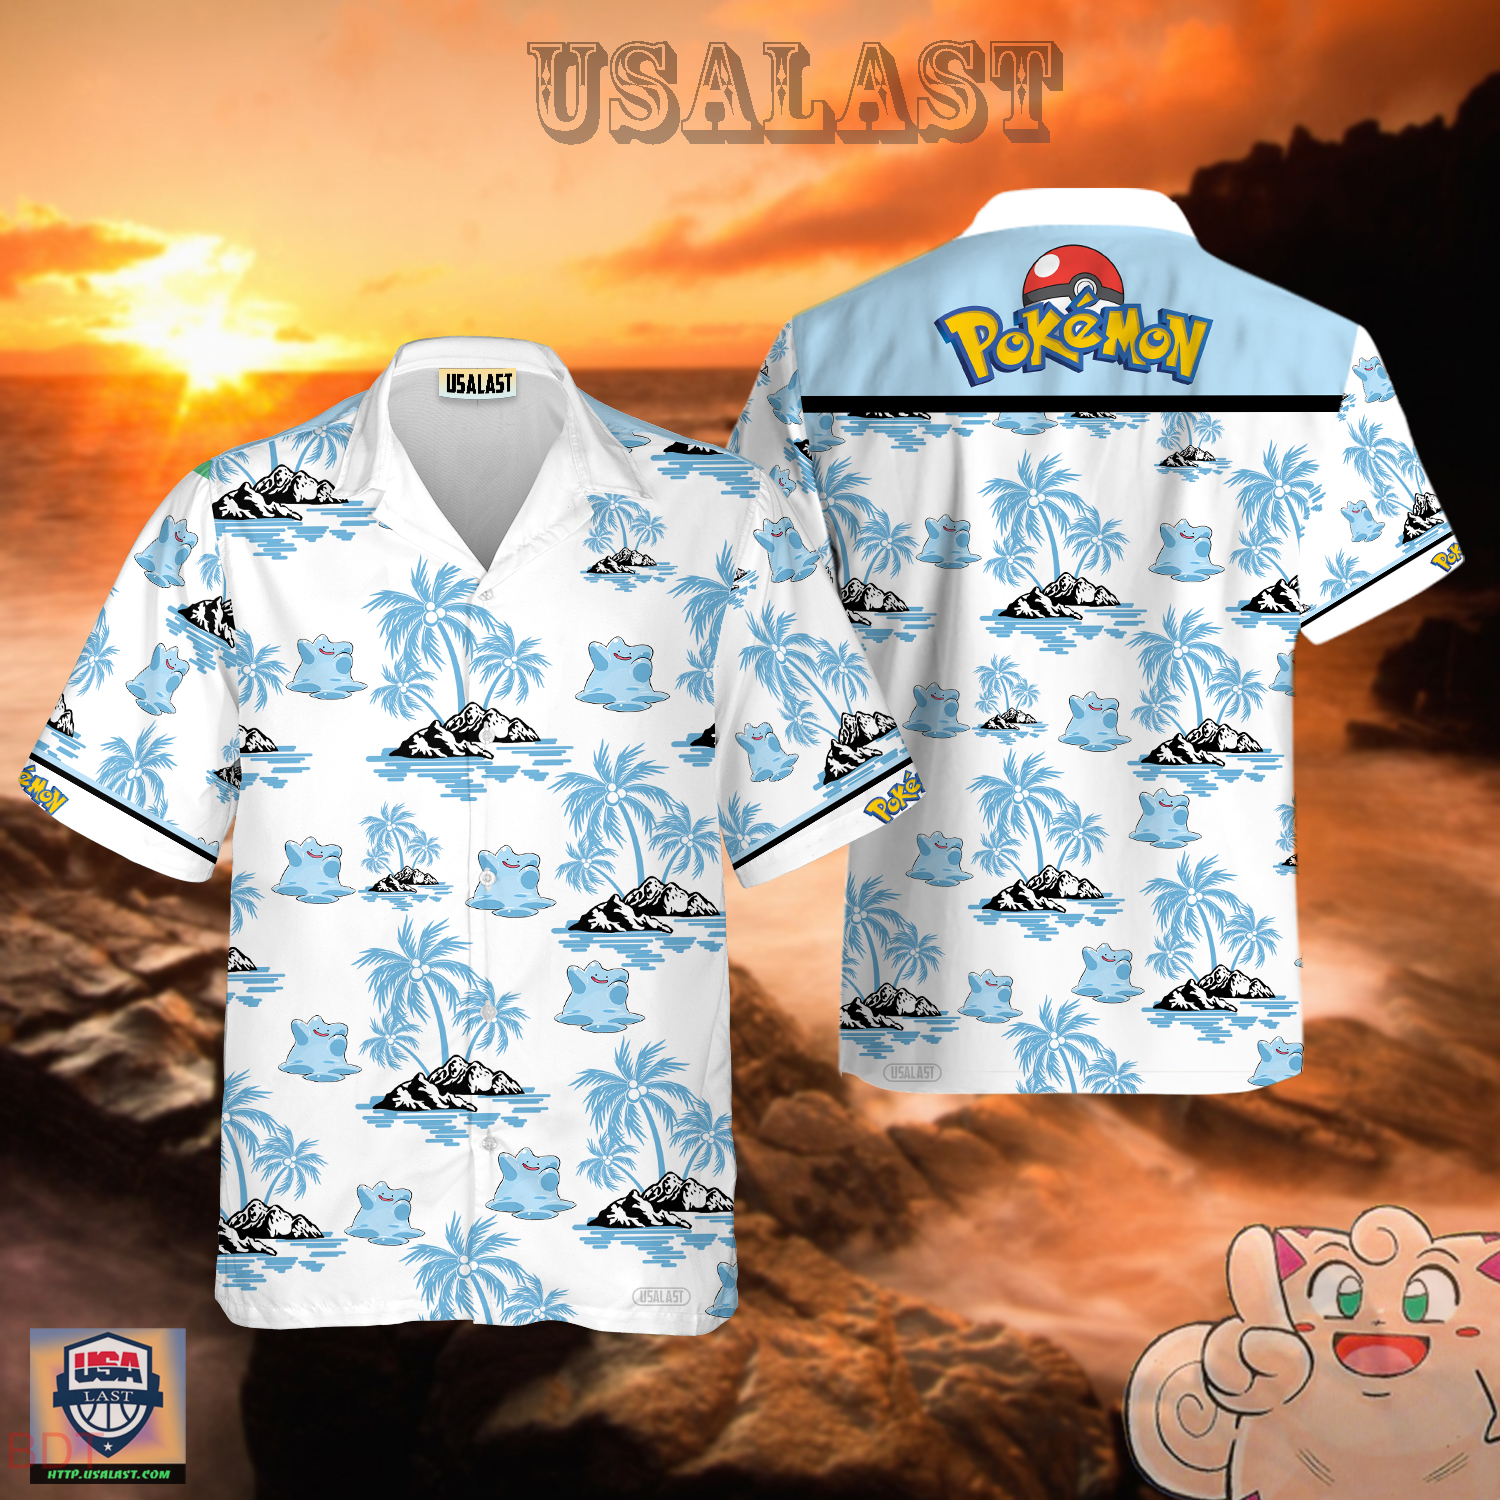 Ditto Pokemon Hawaiian Shirt – Usalast